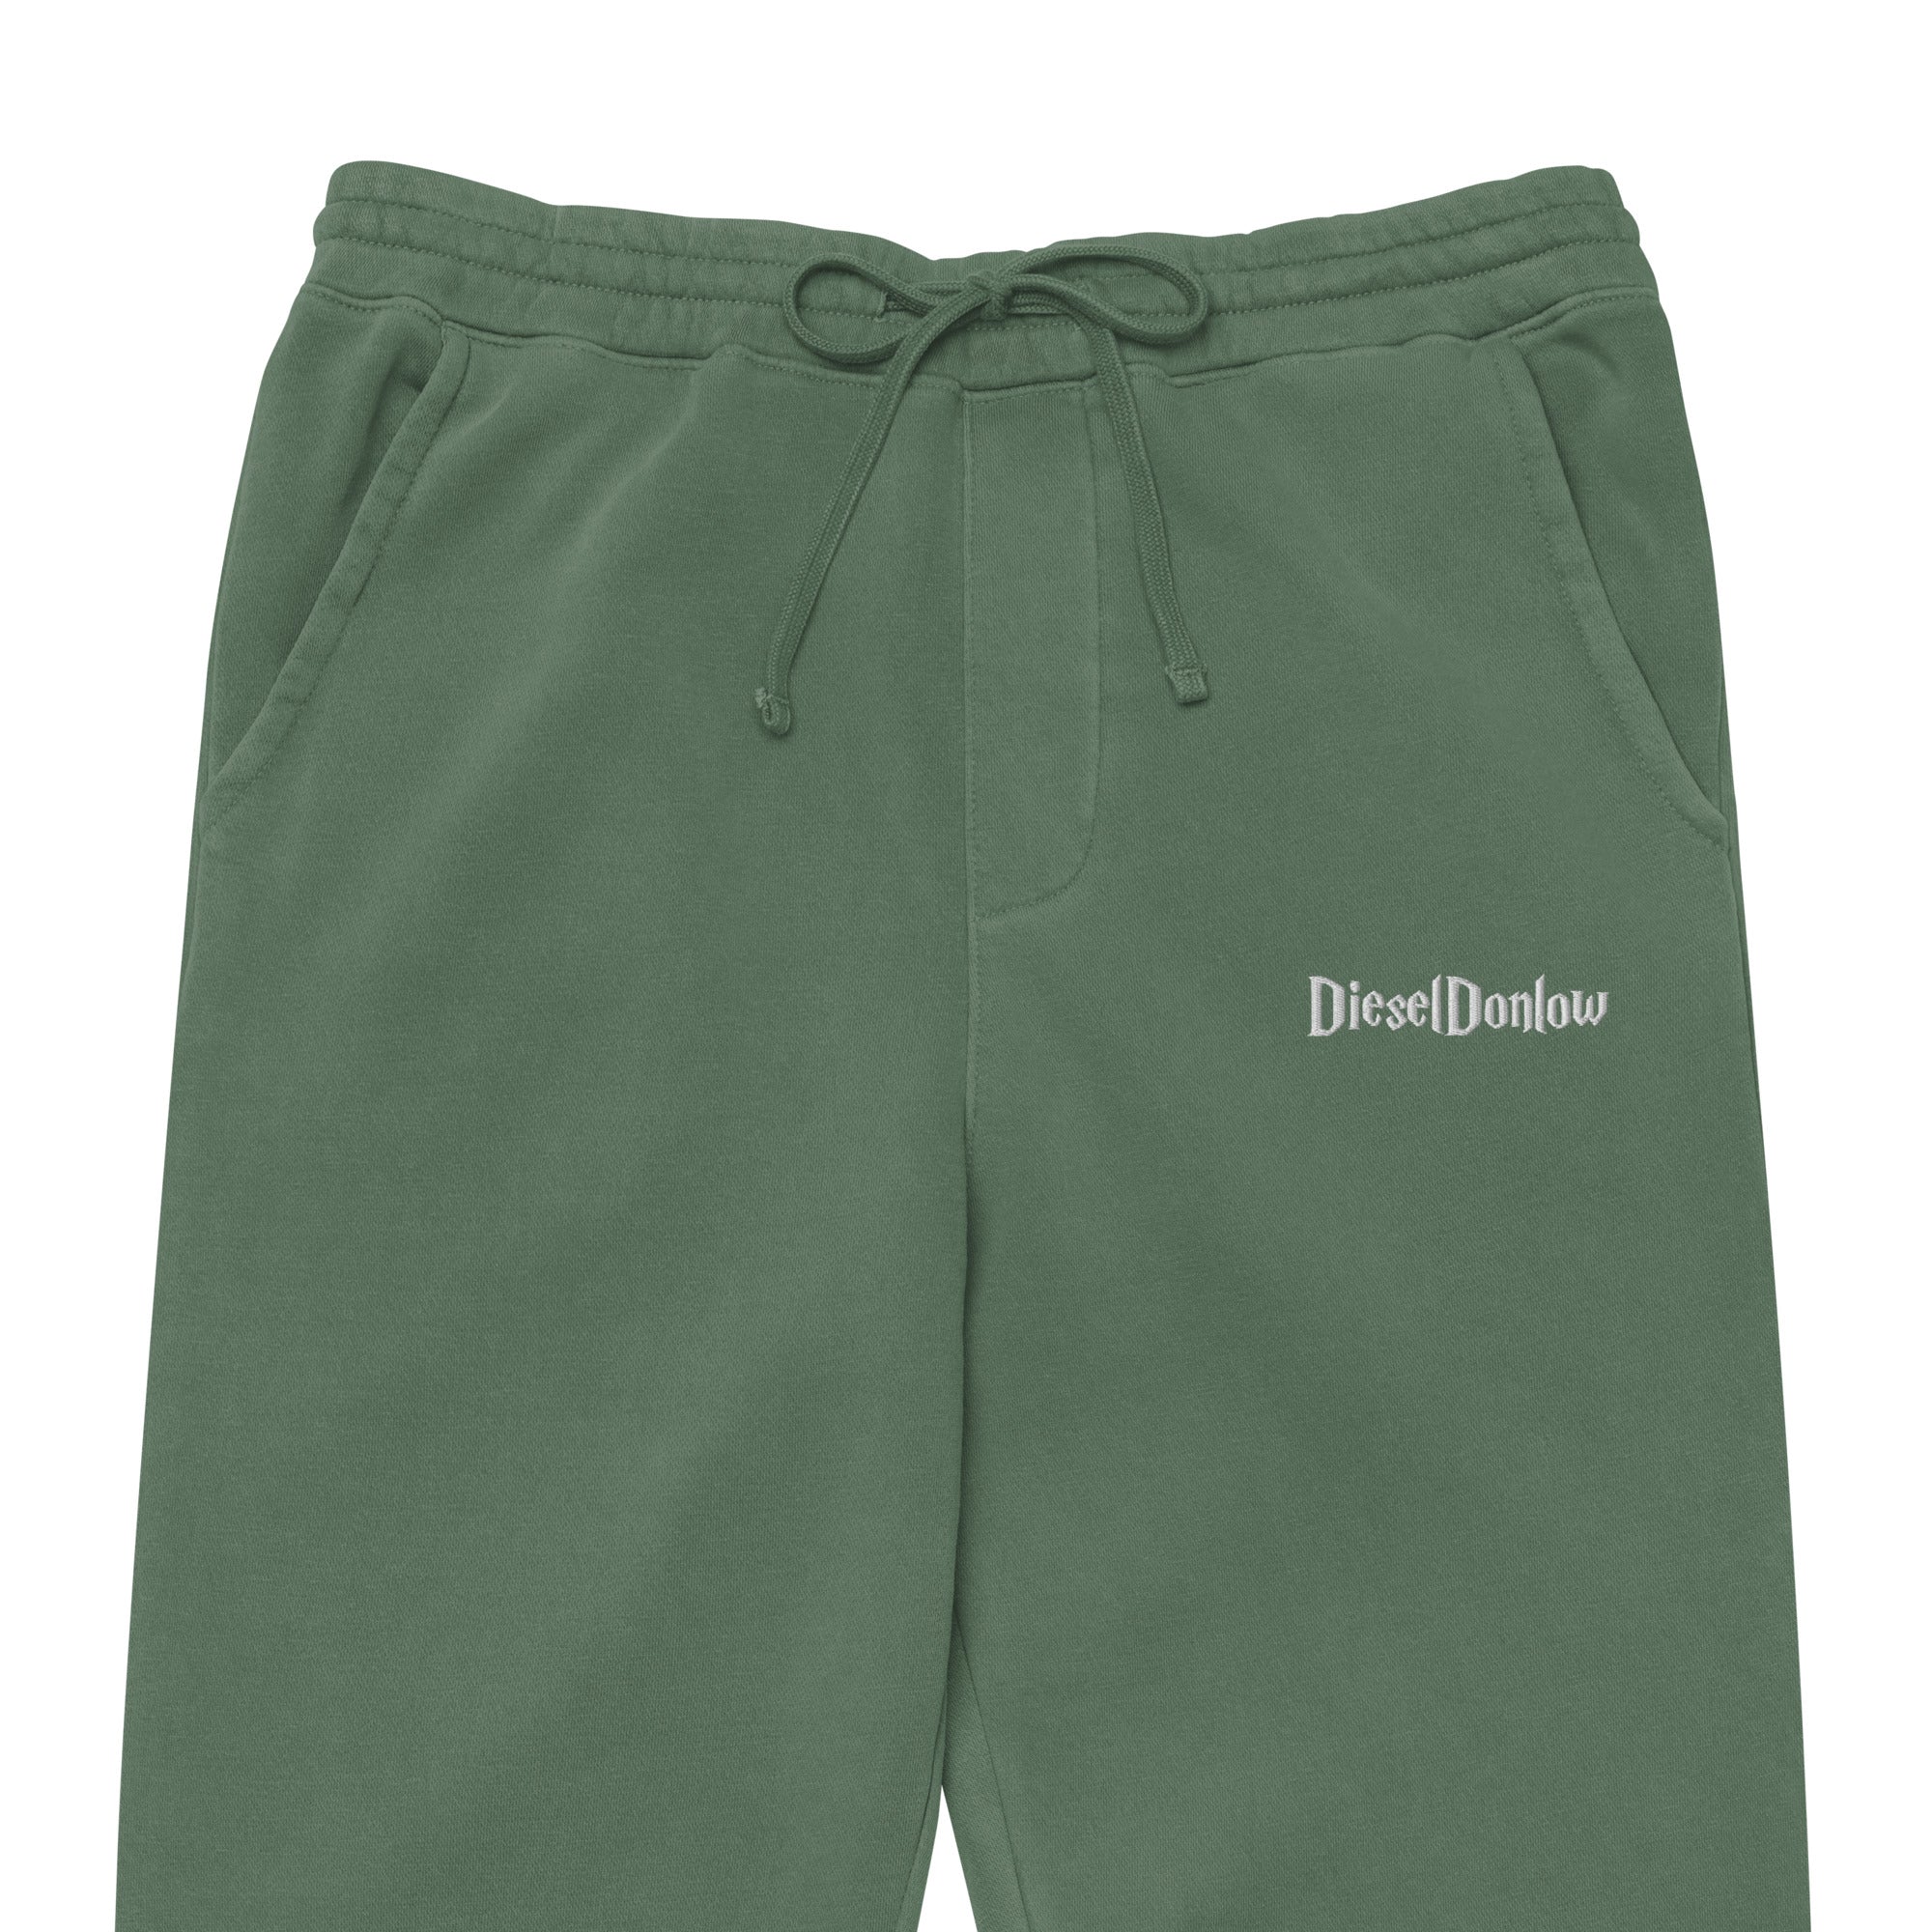 DieselDonlow sweatpants